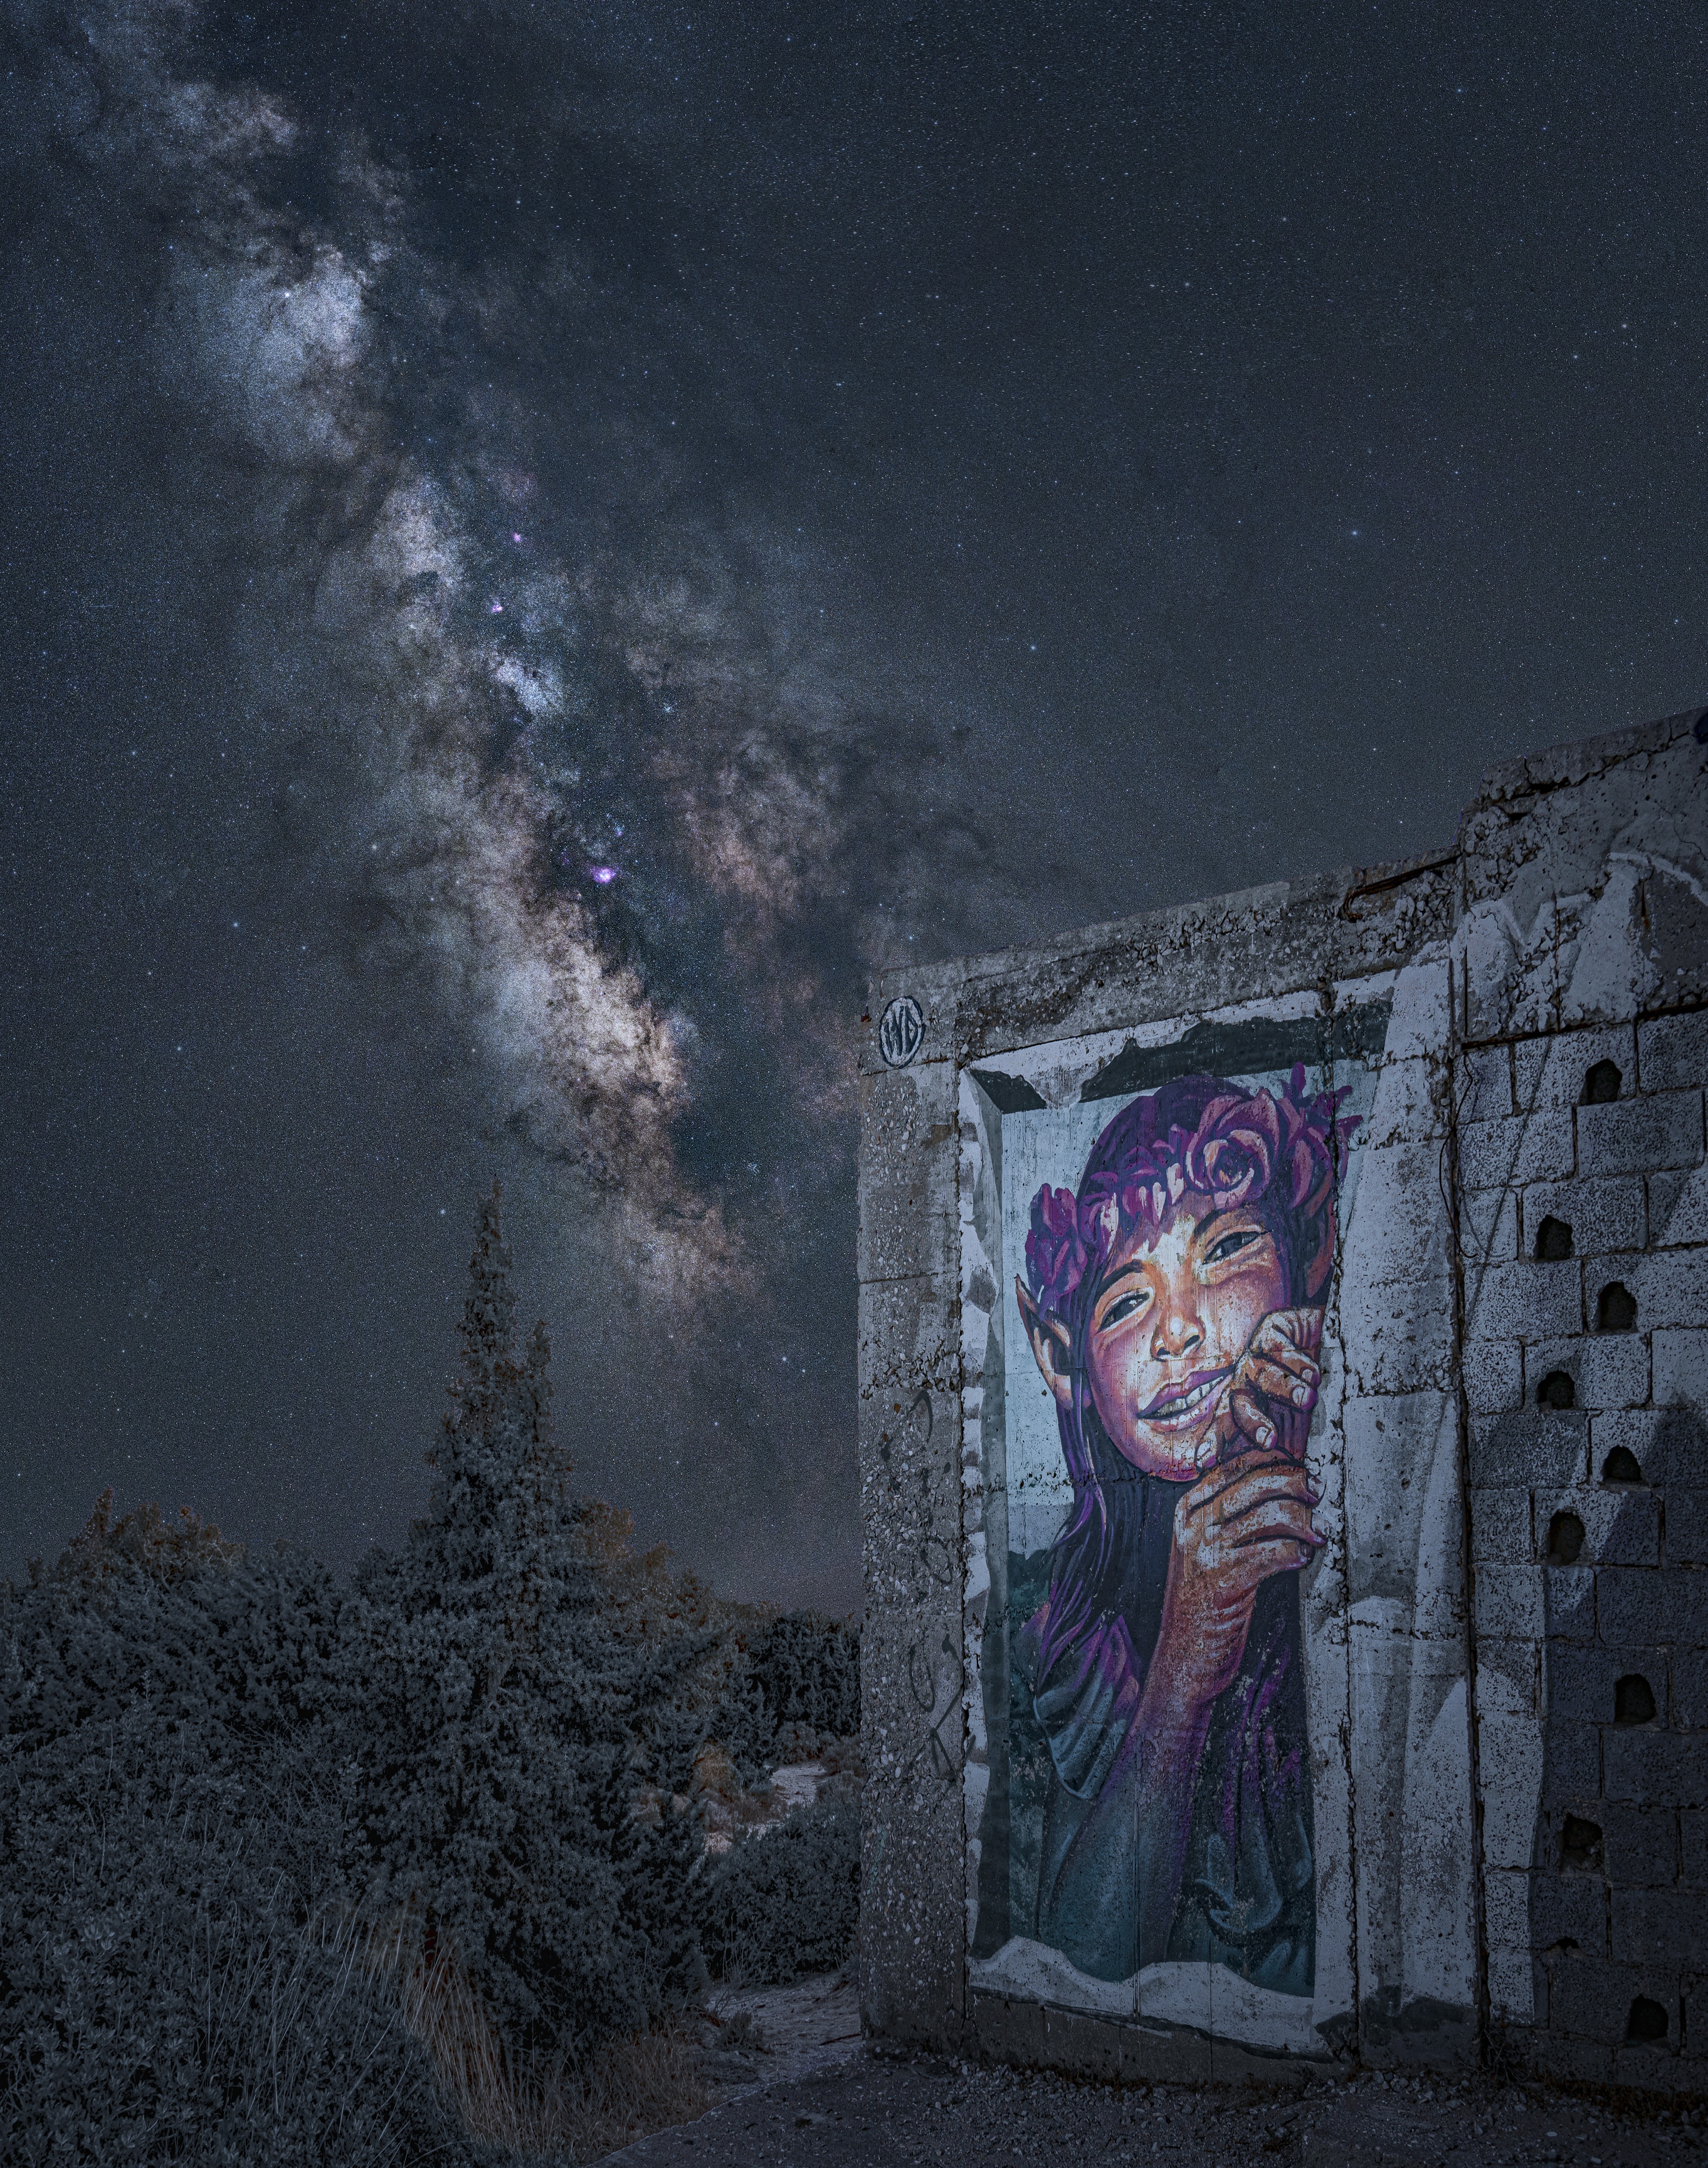 Pandora’s Box - The Milky Way viewed behind a graffiti of Pandora by Wild Drawing (WD) a Balinese artist on the Greek island of Naxos